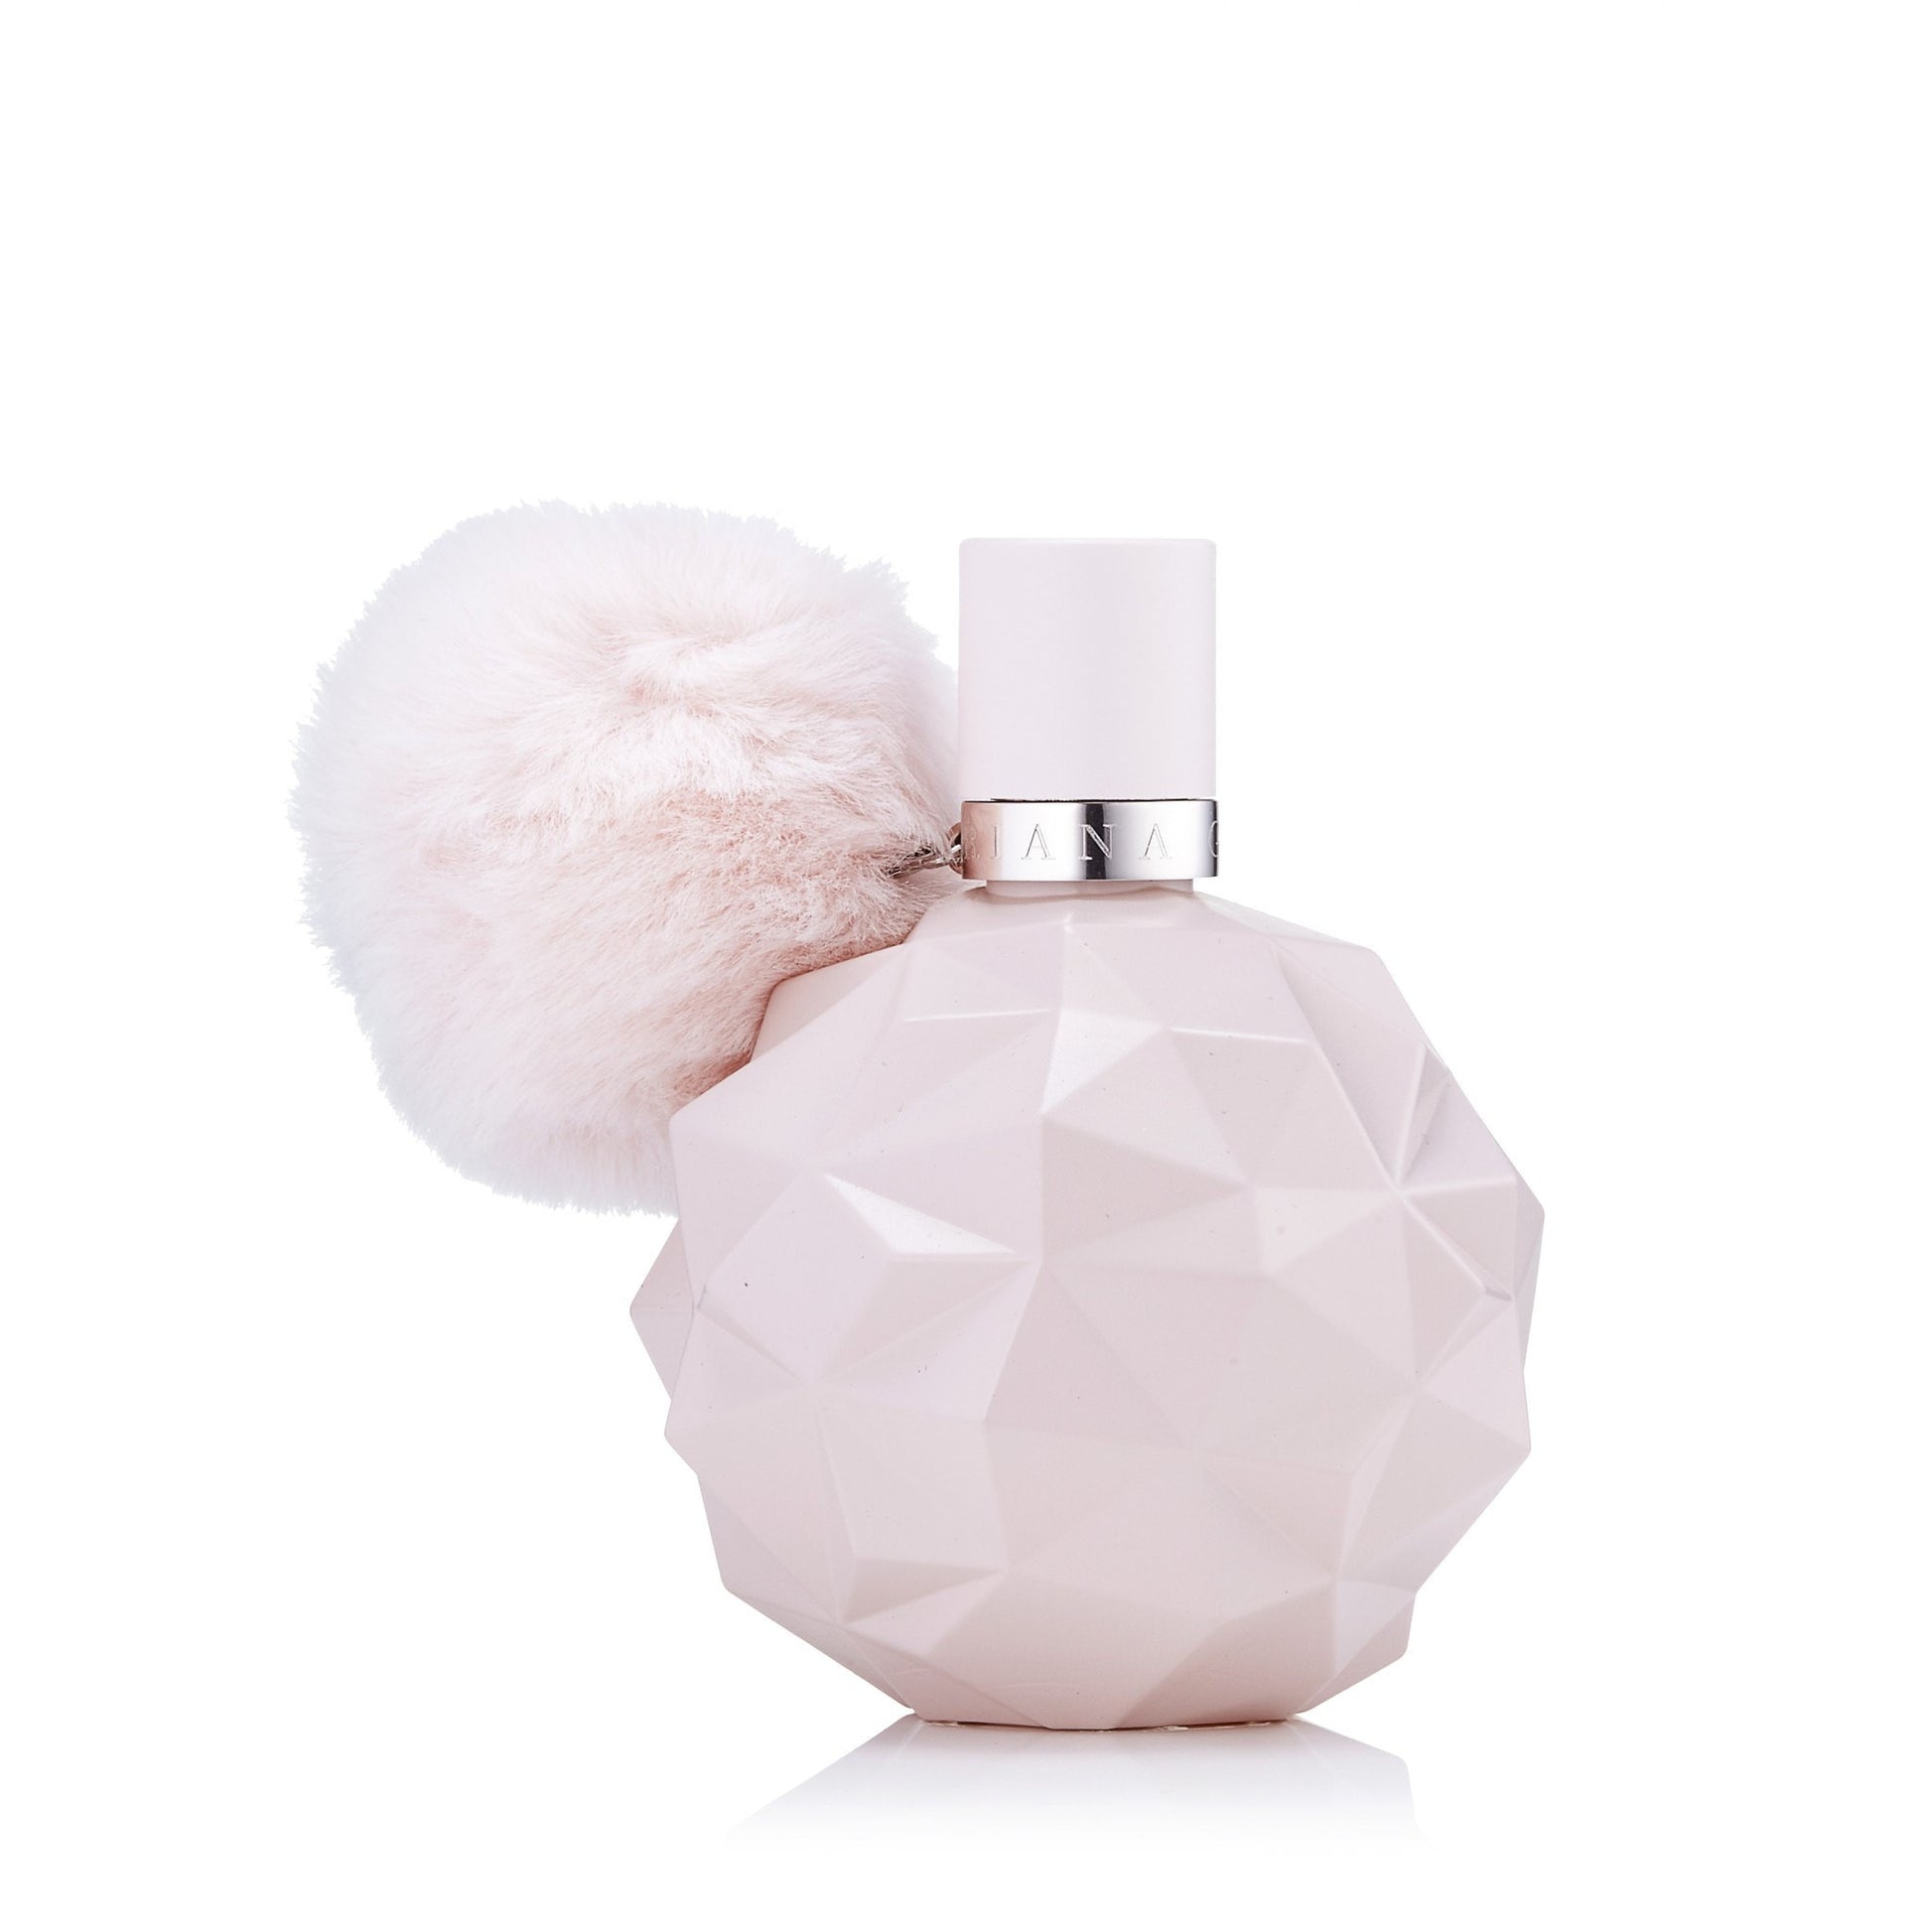 Sweet Like Candy Eau de Parfum Spray for Women by Ariana Grande 3.4 oz. Click to open in modal